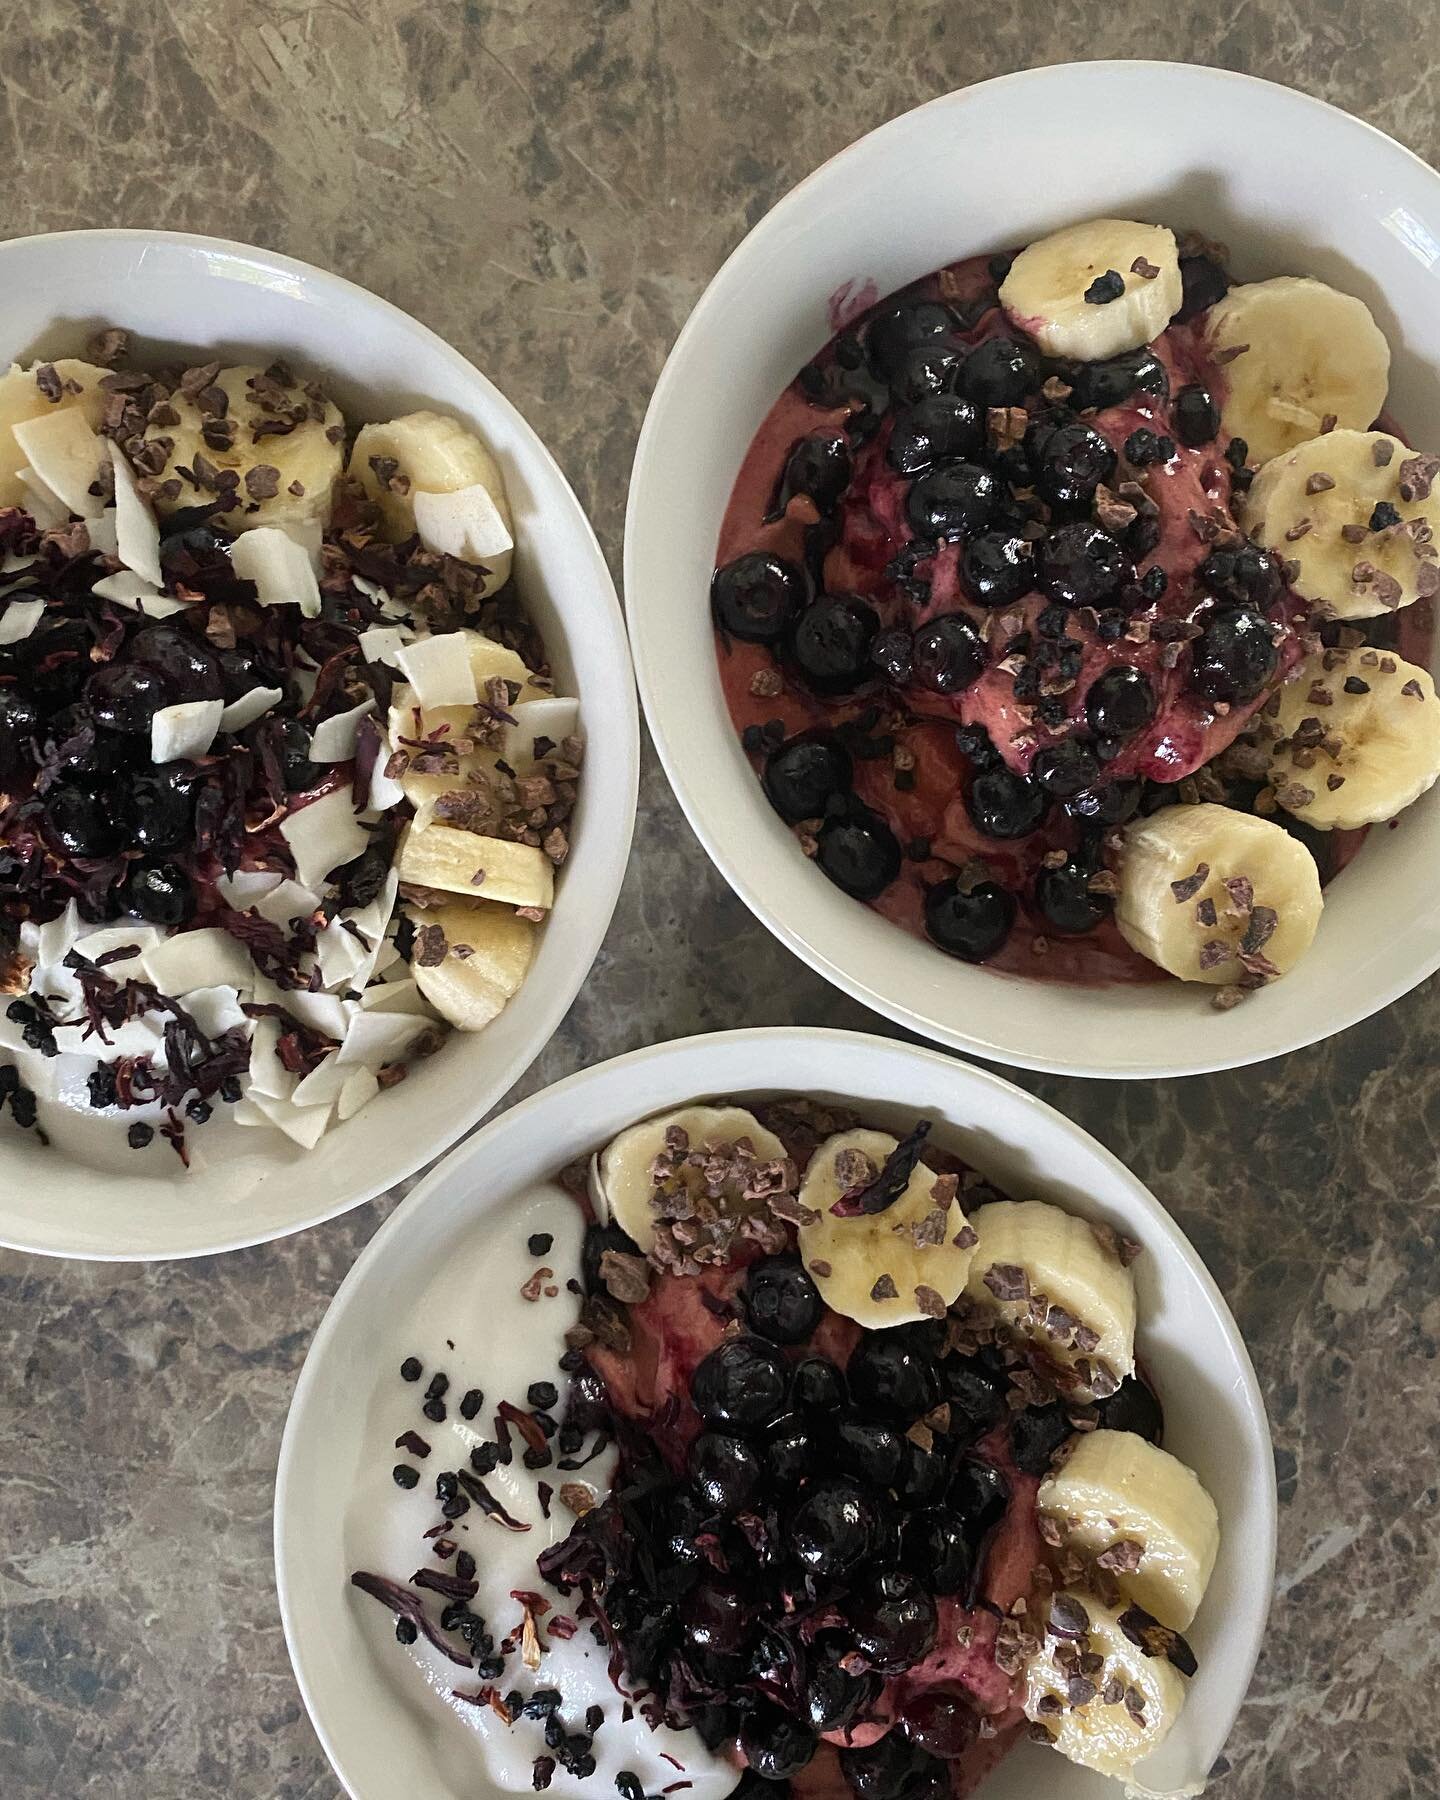 Goodies goodies for breakfast. Frozen banana pur&eacute;ed with blueberries, coconut yogurt, topped with coconut shreds and elderberries, cacao and bananas
*
*
*
*Follow @katszen_wellness
*
*
*

#plantbased #wfpb #plantbasedmpls #minneapolis #veganmp